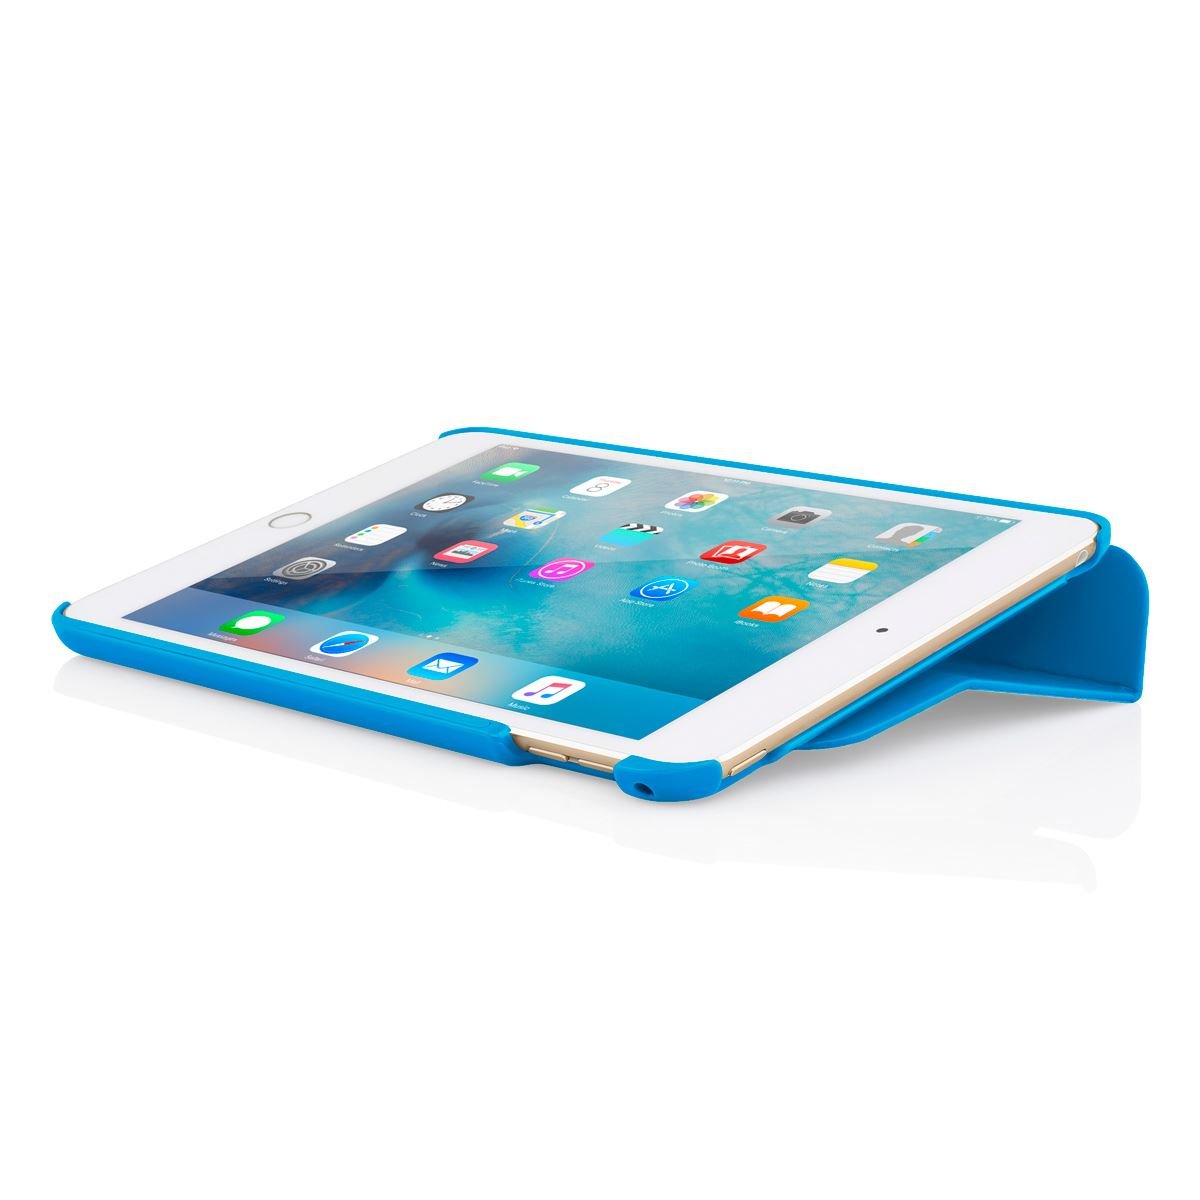 Funda Incipio Tuxen Folio iPad mini 4 Azul Cierre Magnético